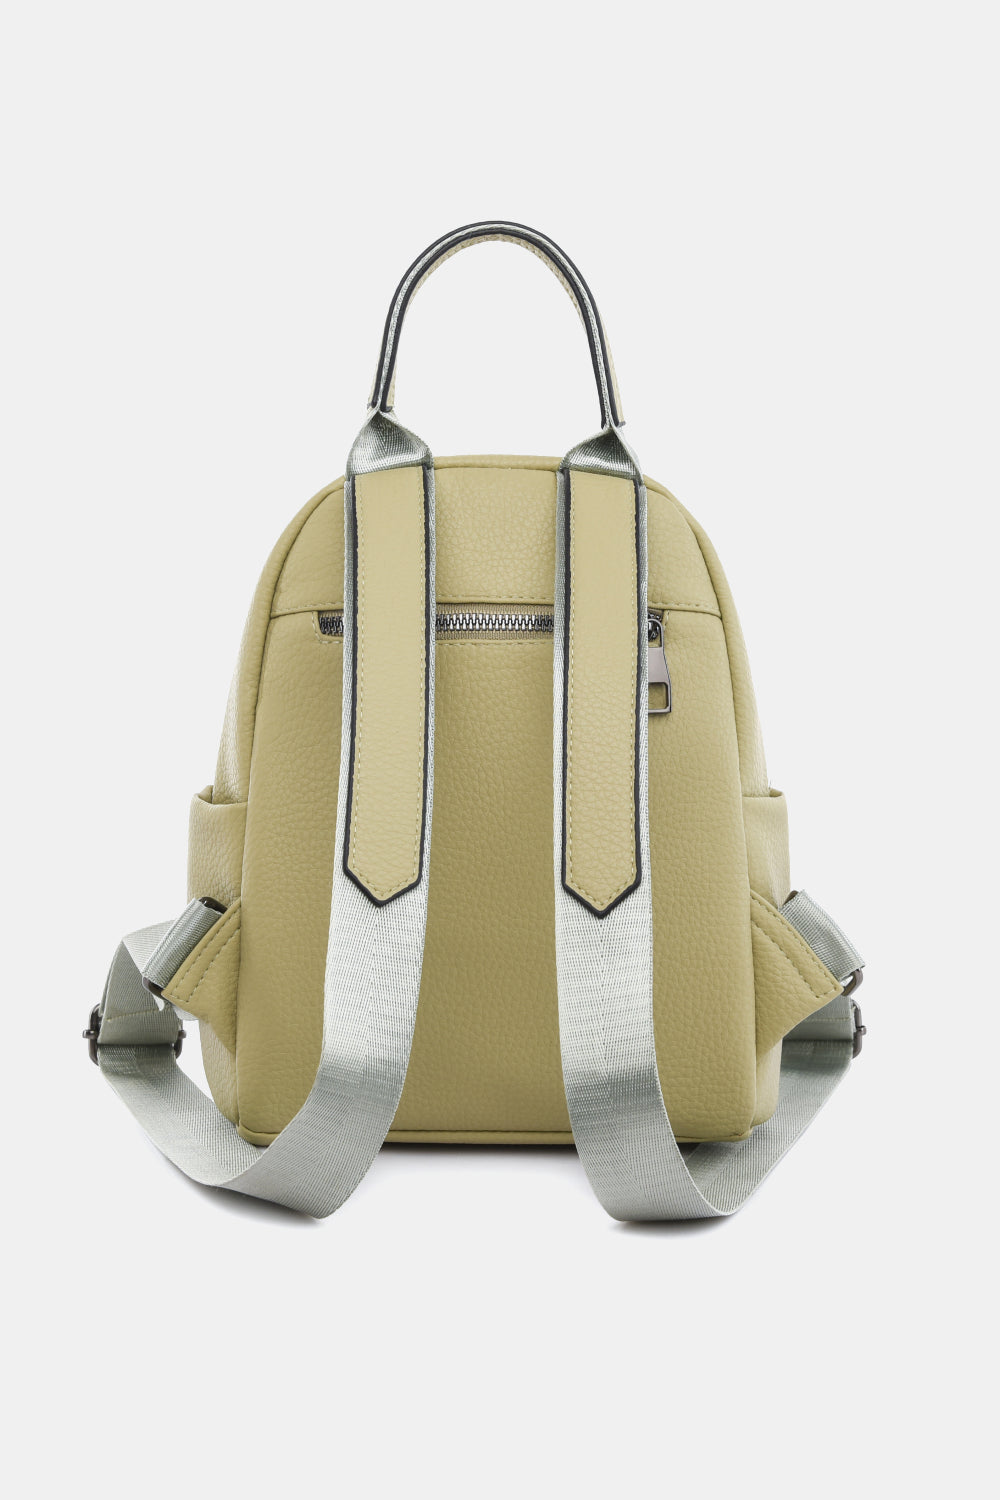 White Smoke Medium PU Leather Backpack Handbags